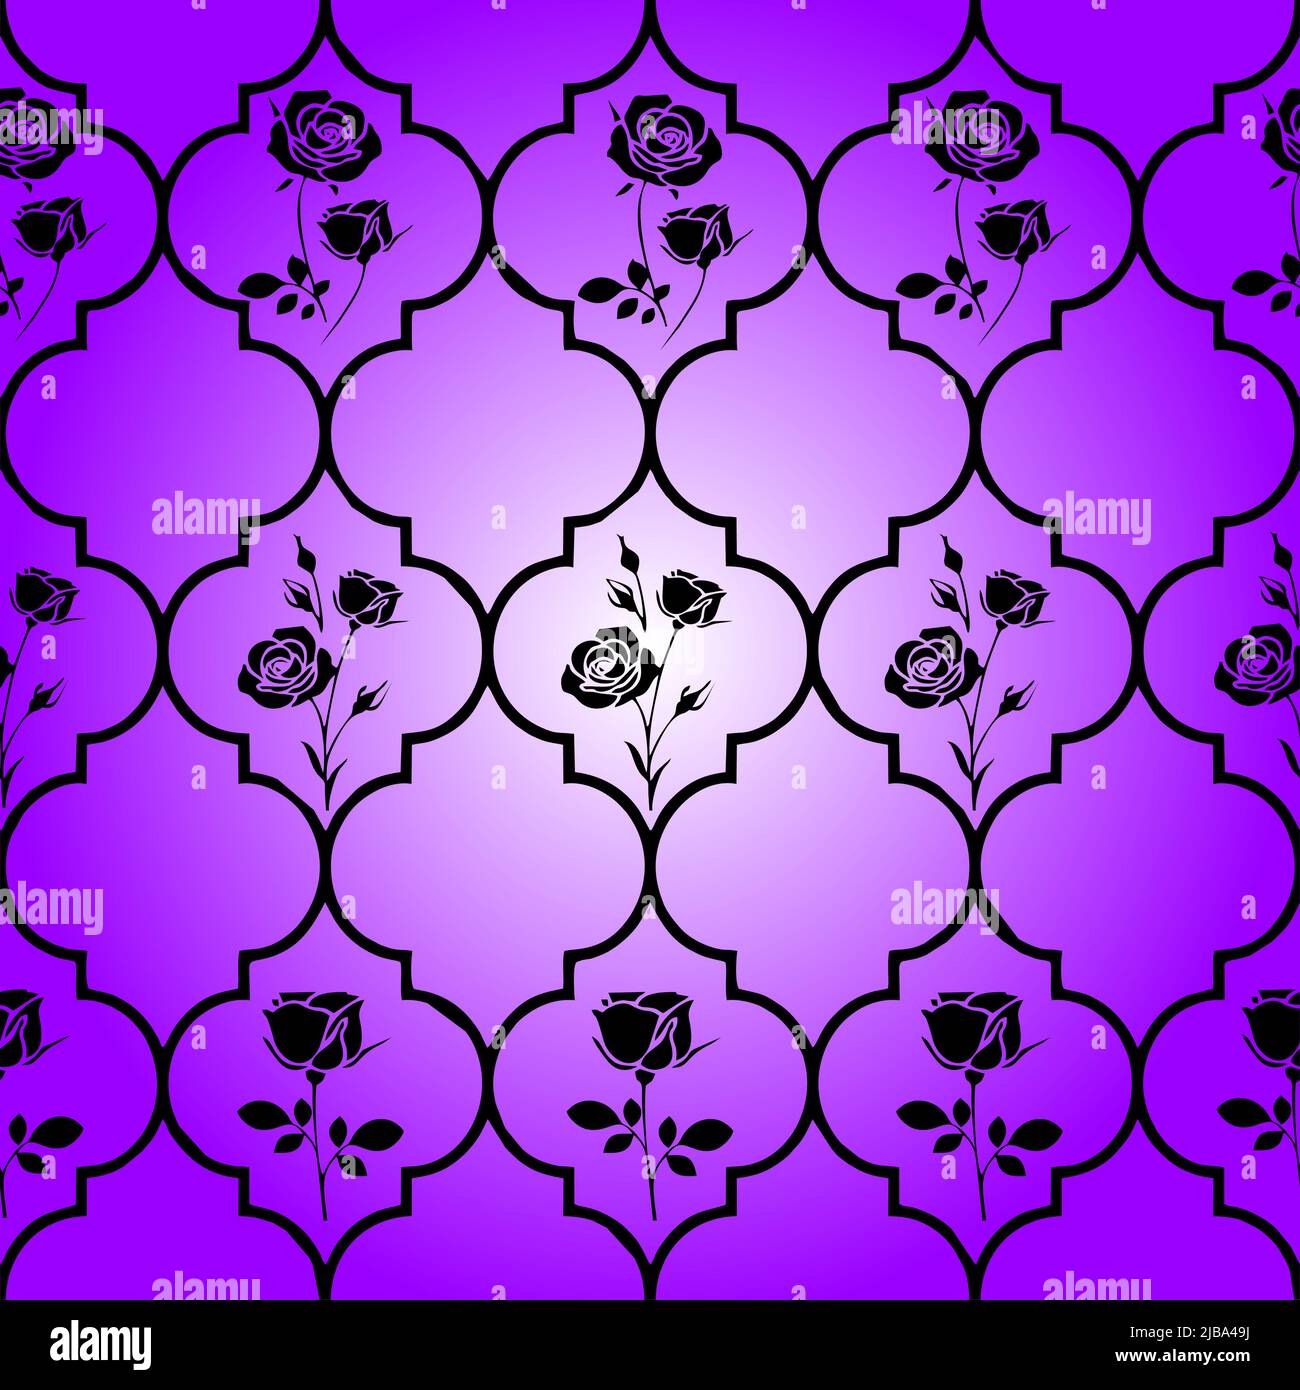 bushy black geometric pattern with floral elements on purple background, tile, symmetrical repeat pattern, texture, design Stock Vector